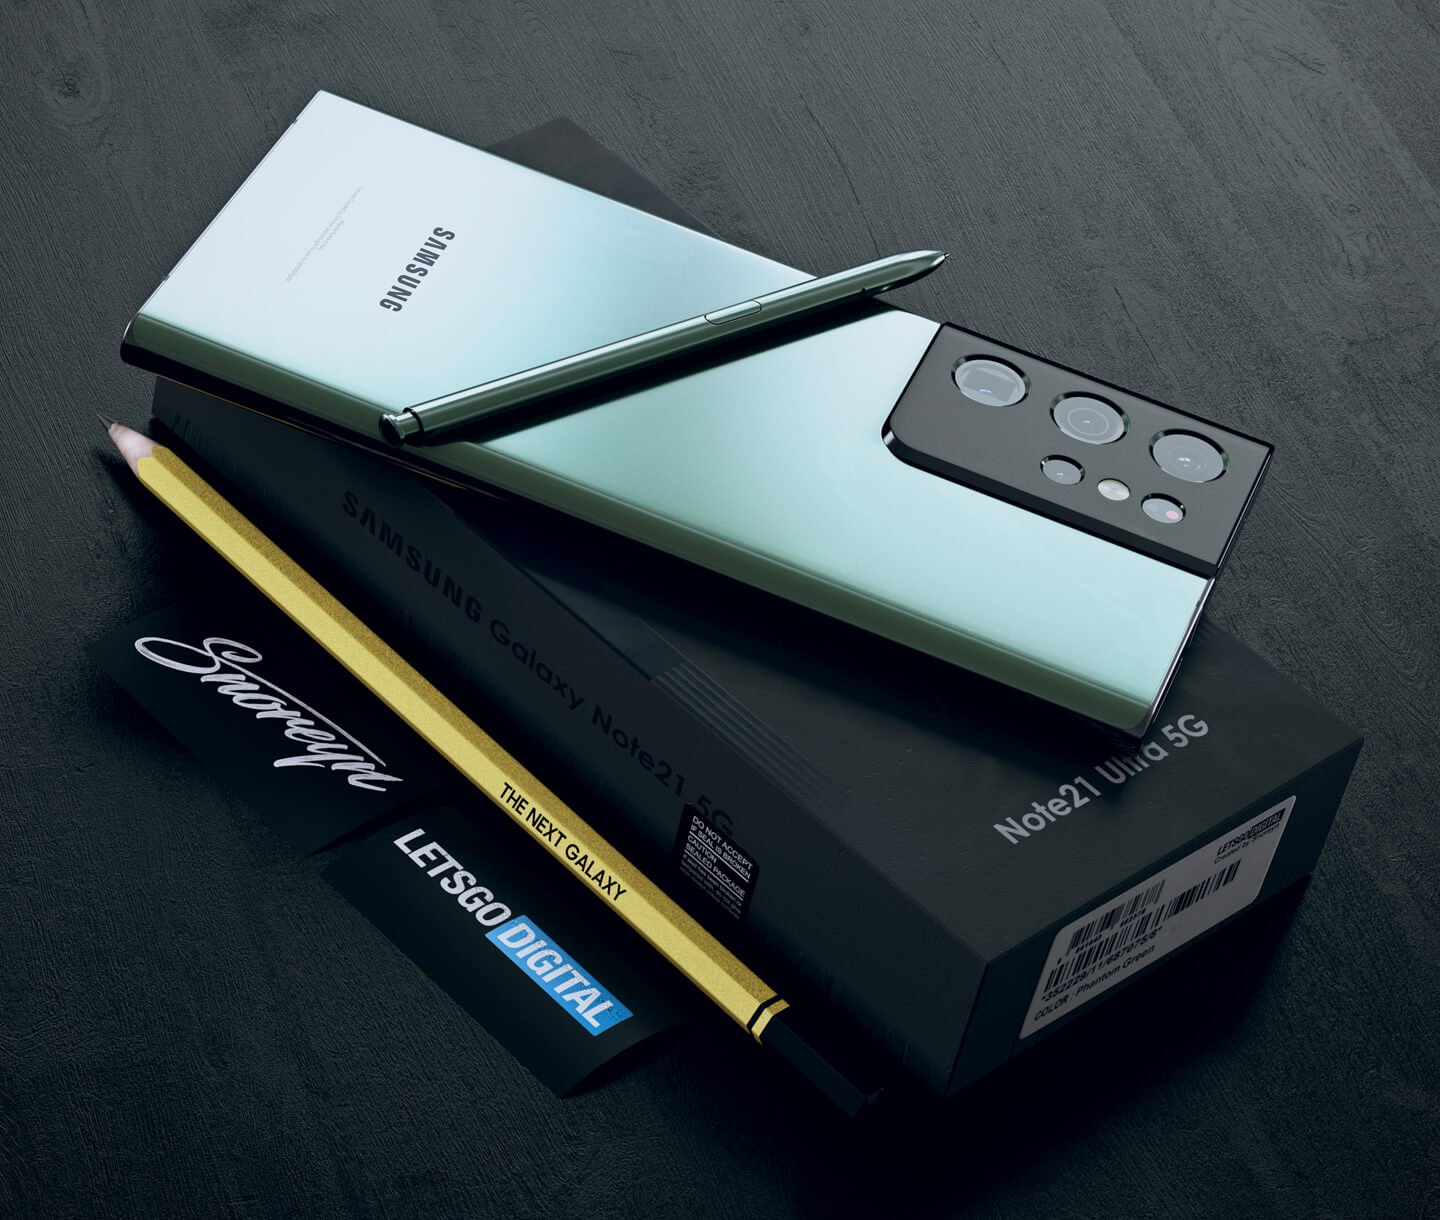 Samsung Galaxy Note 2021 model